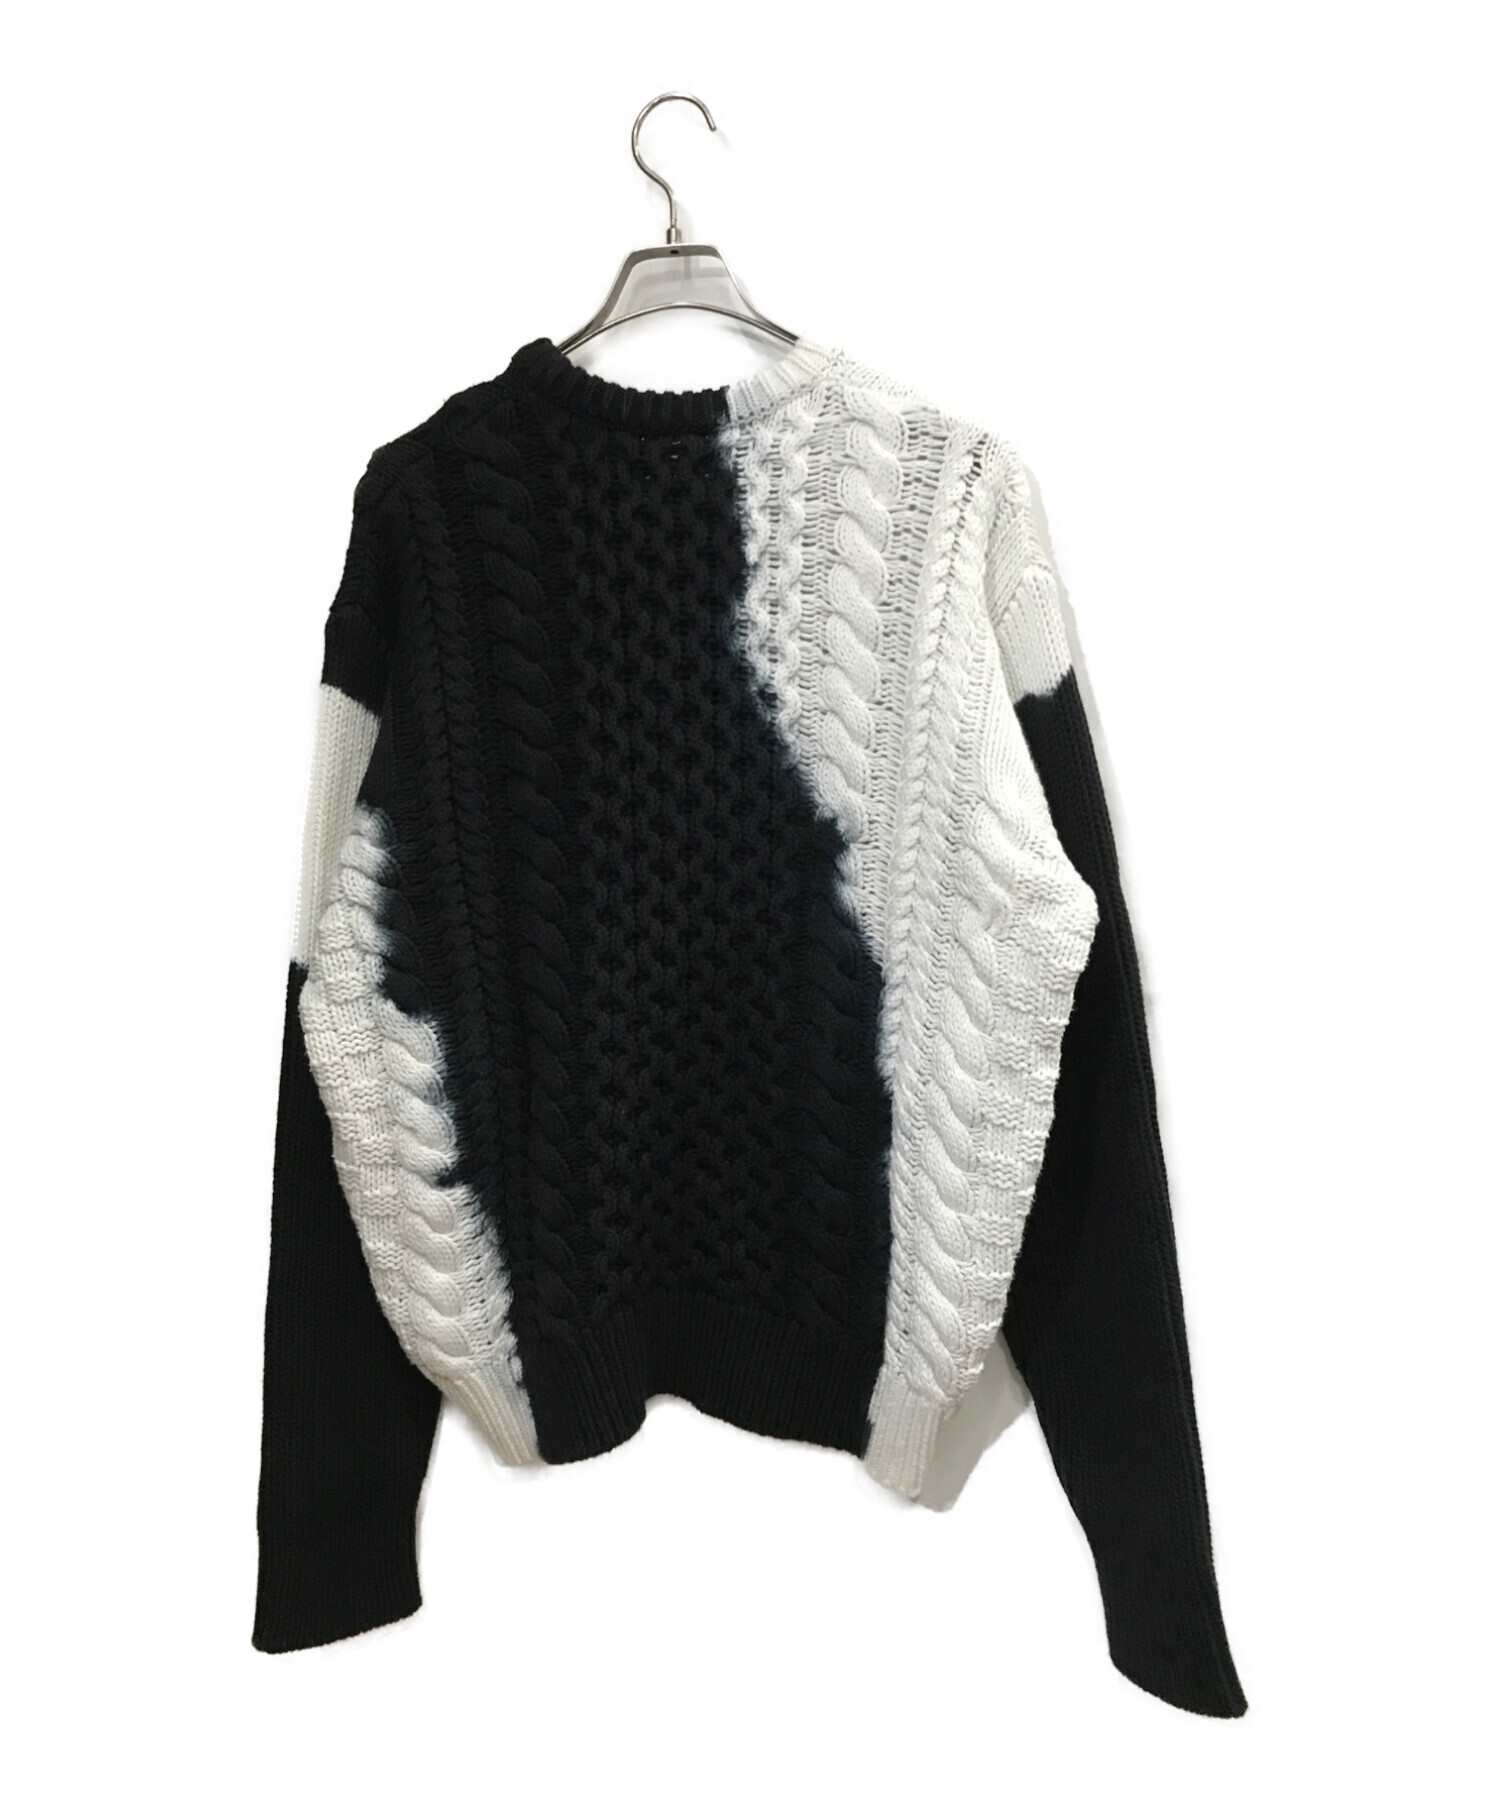 stussy (ステューシー) Tie Dye Fisherman Sweater ホワイト×ブラック サイズ:XL